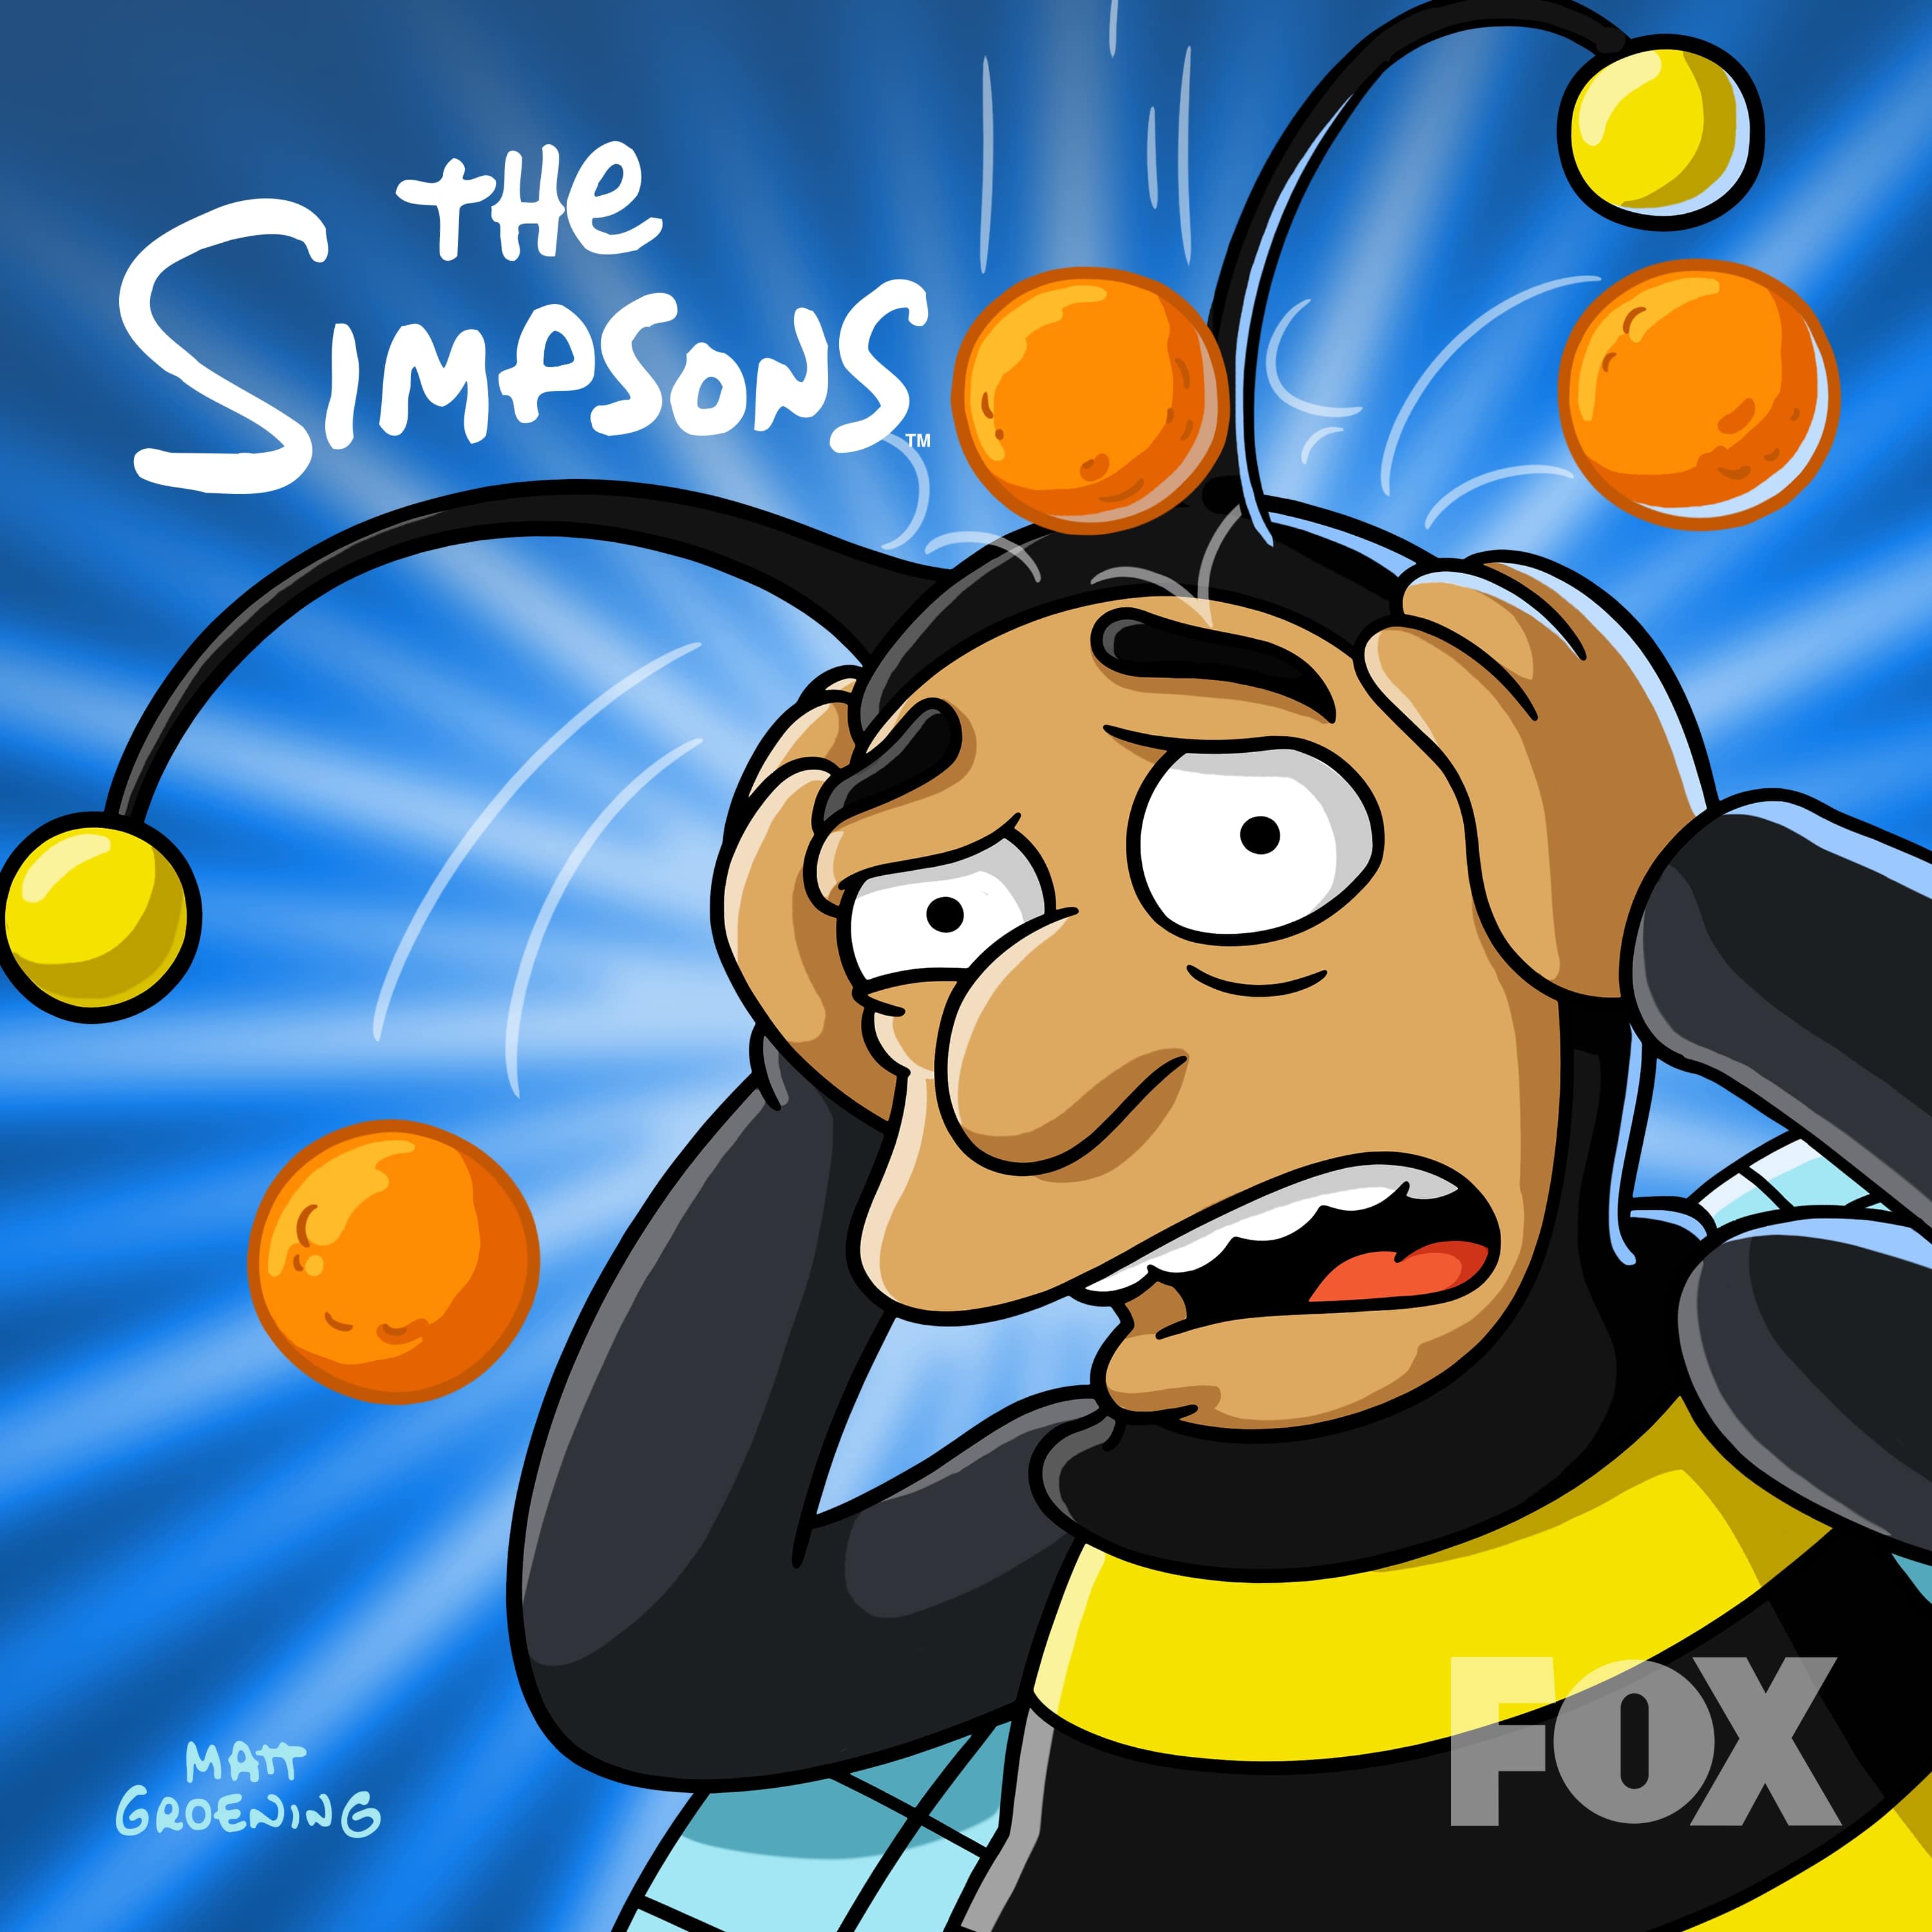 the simpsons season 30 download torrent